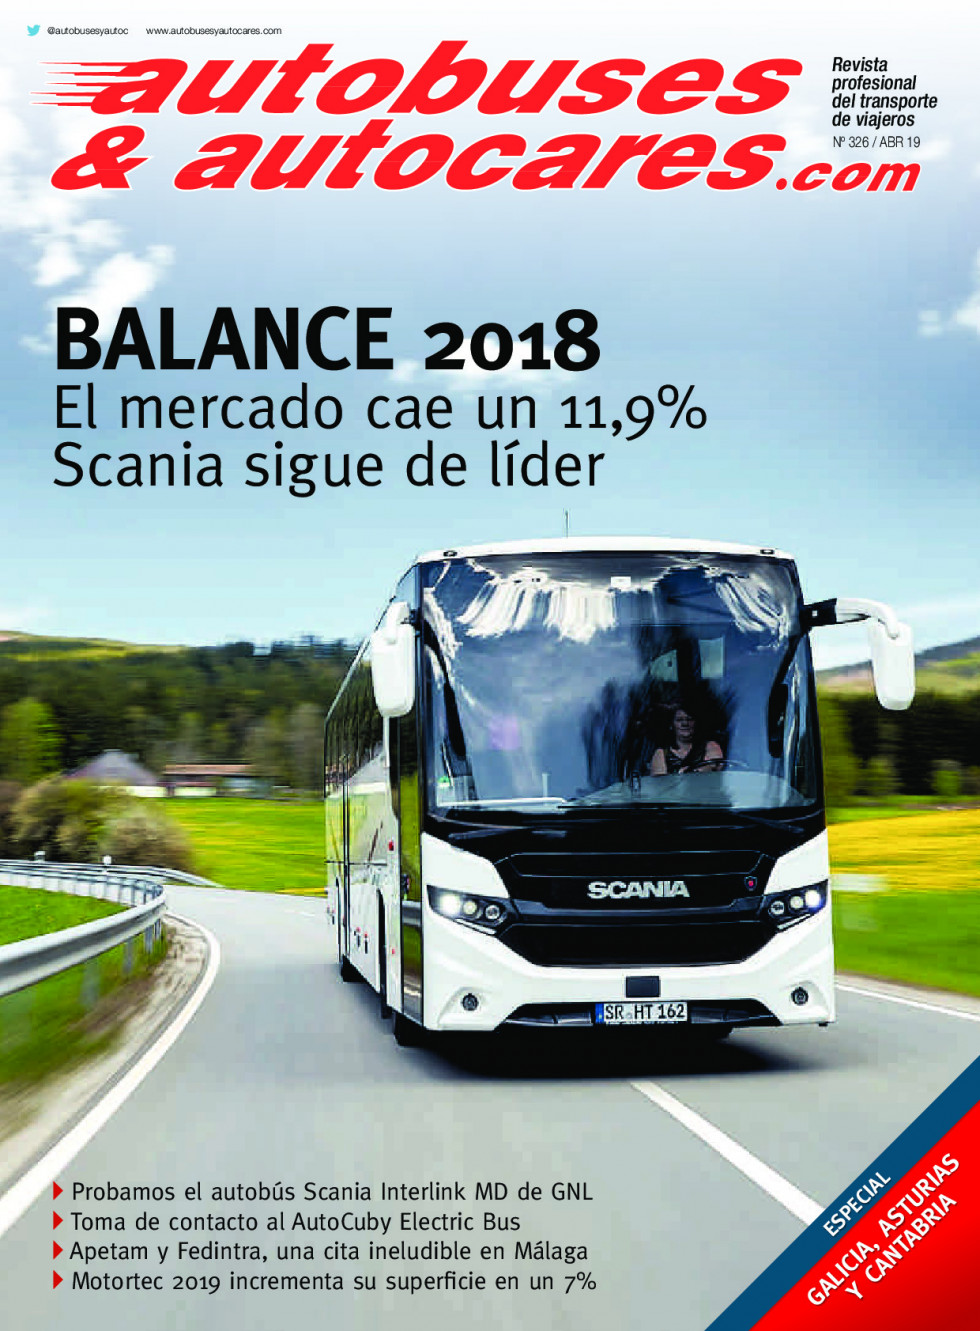 Autobuses326